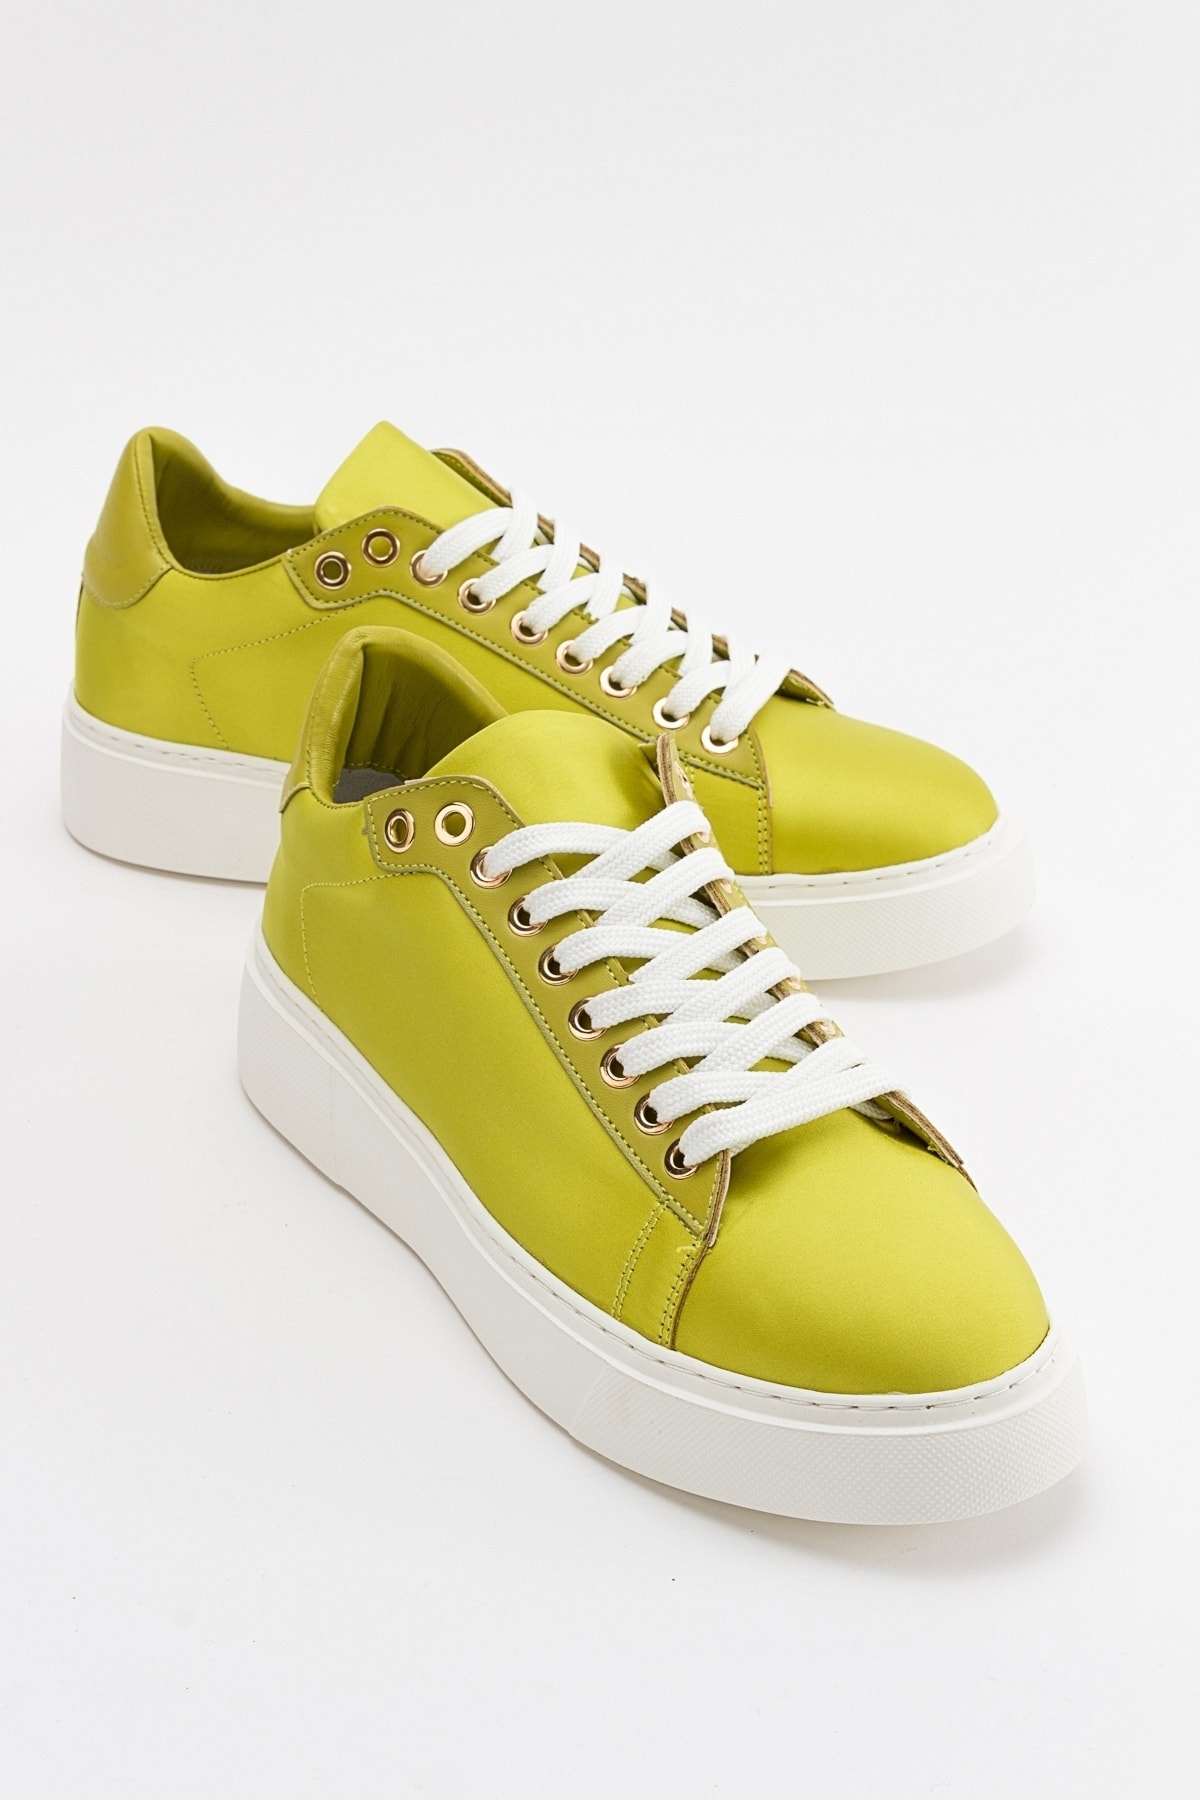 LuviShoes Vrop Green Women's Sneakers